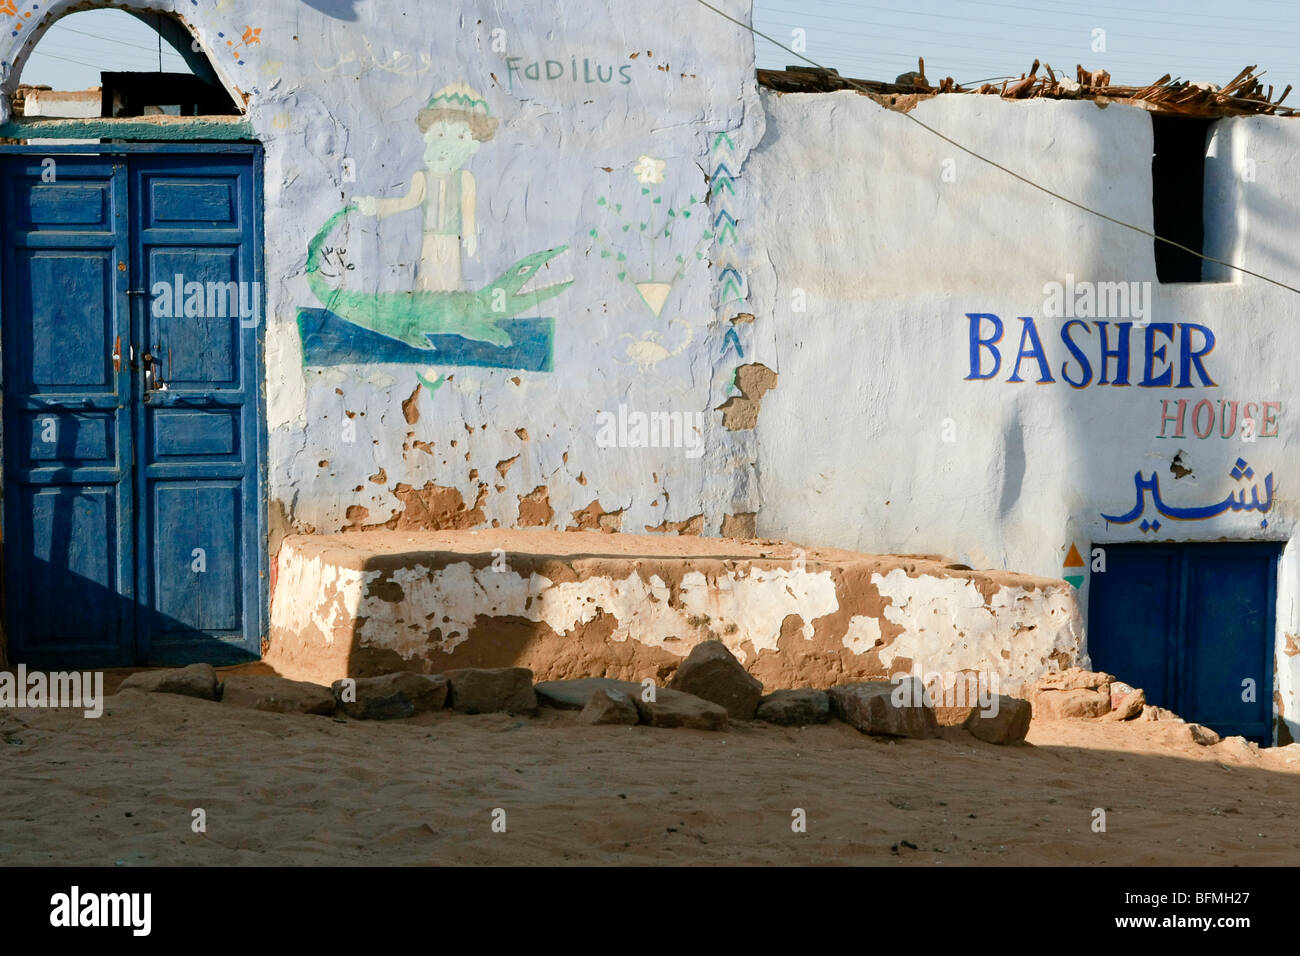 Blue door at a Nubian village, near Aswan, Egypt. Stock Photo